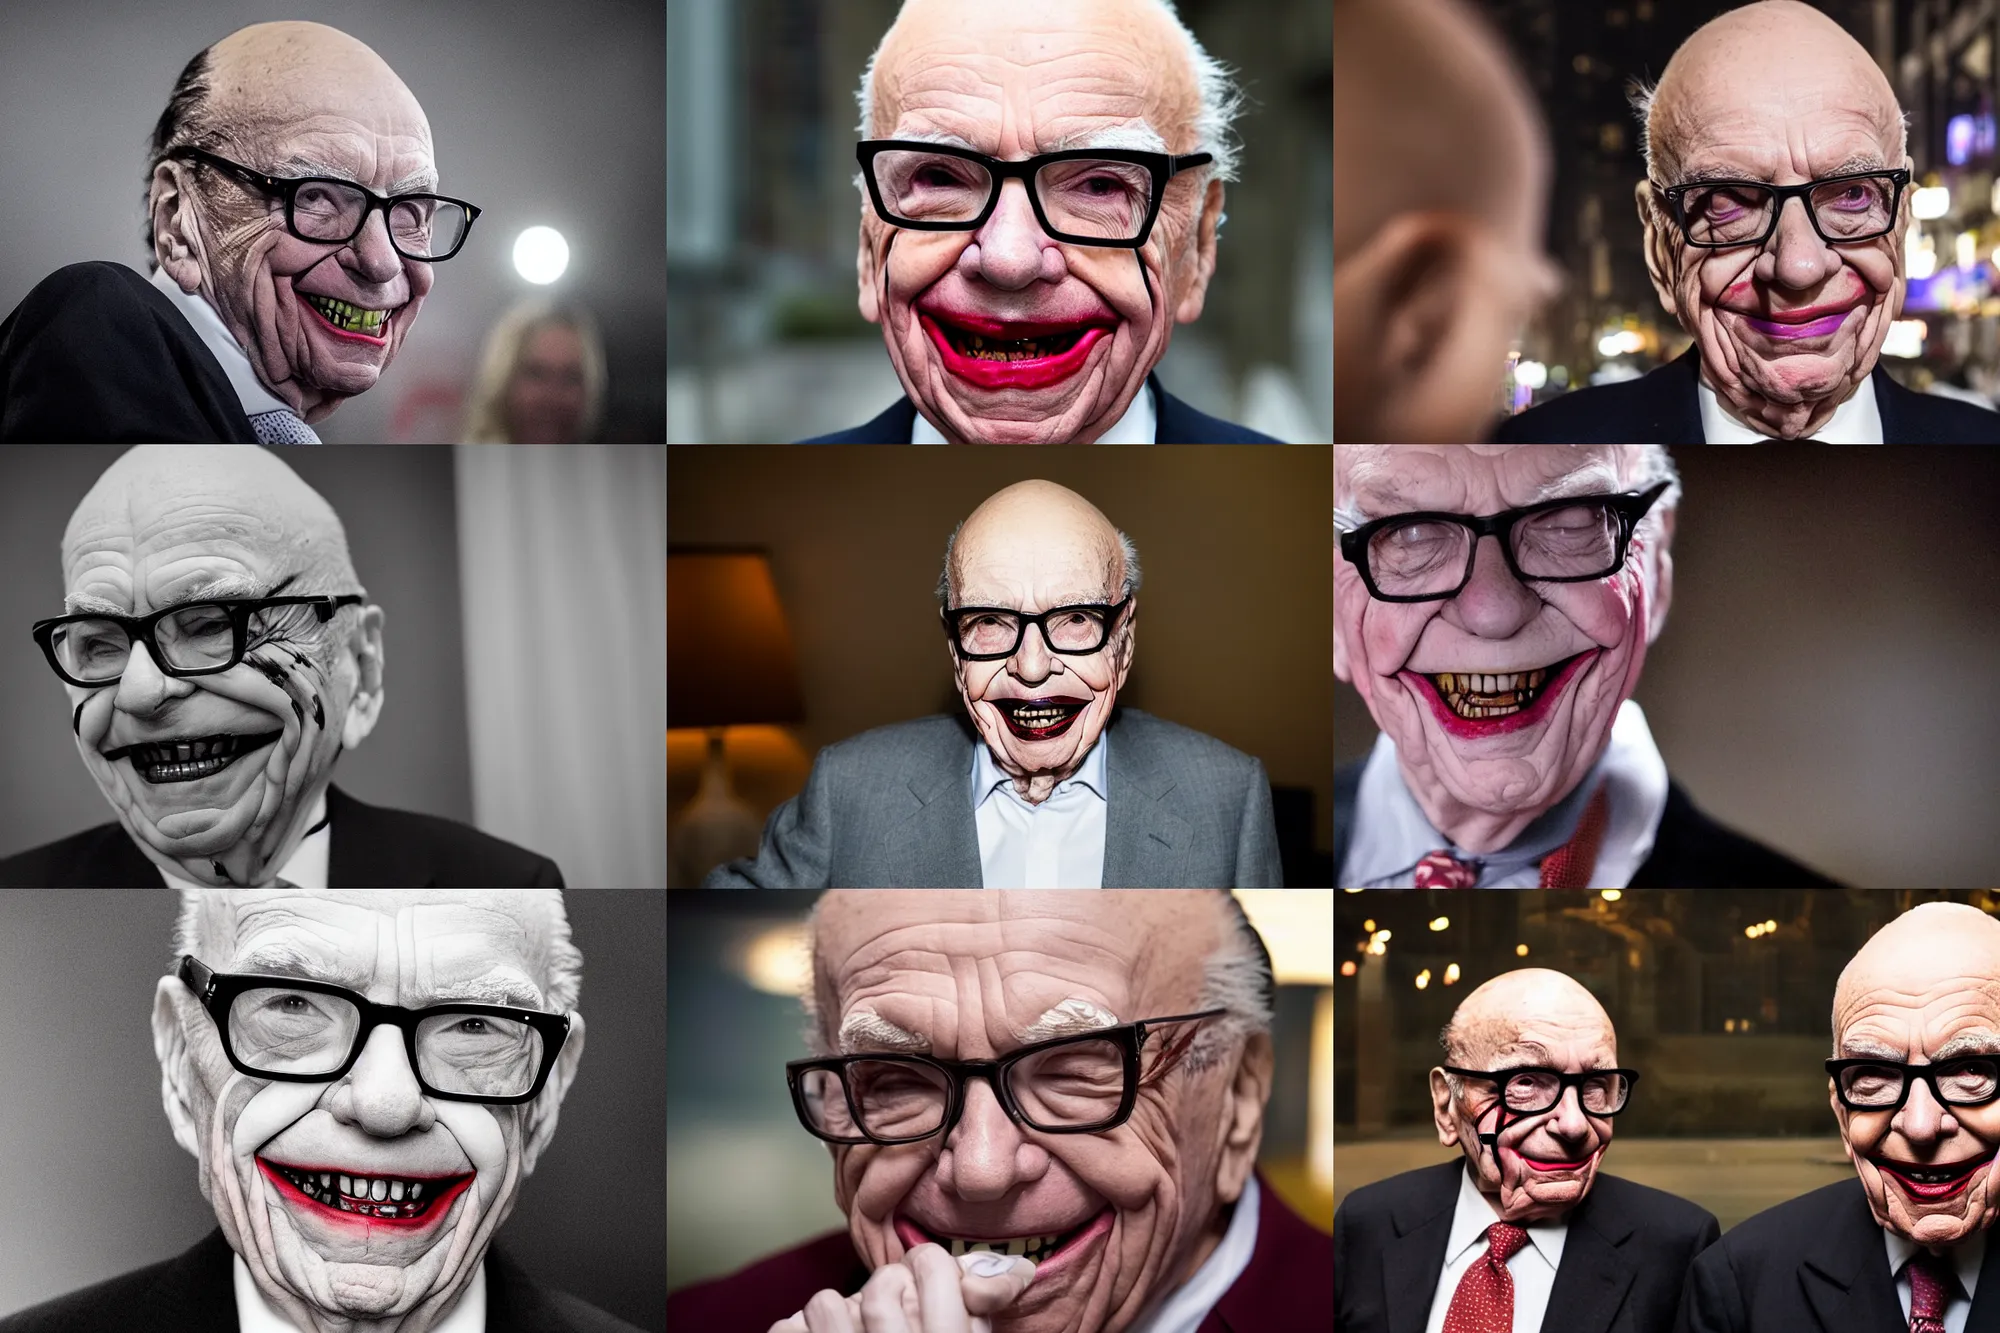 Prompt: Rupert Murdoch wearing glasses and makeup like The Joker, laughing as the world behind him burns, volumetric fog, portrait photography, depth of field, bokeh